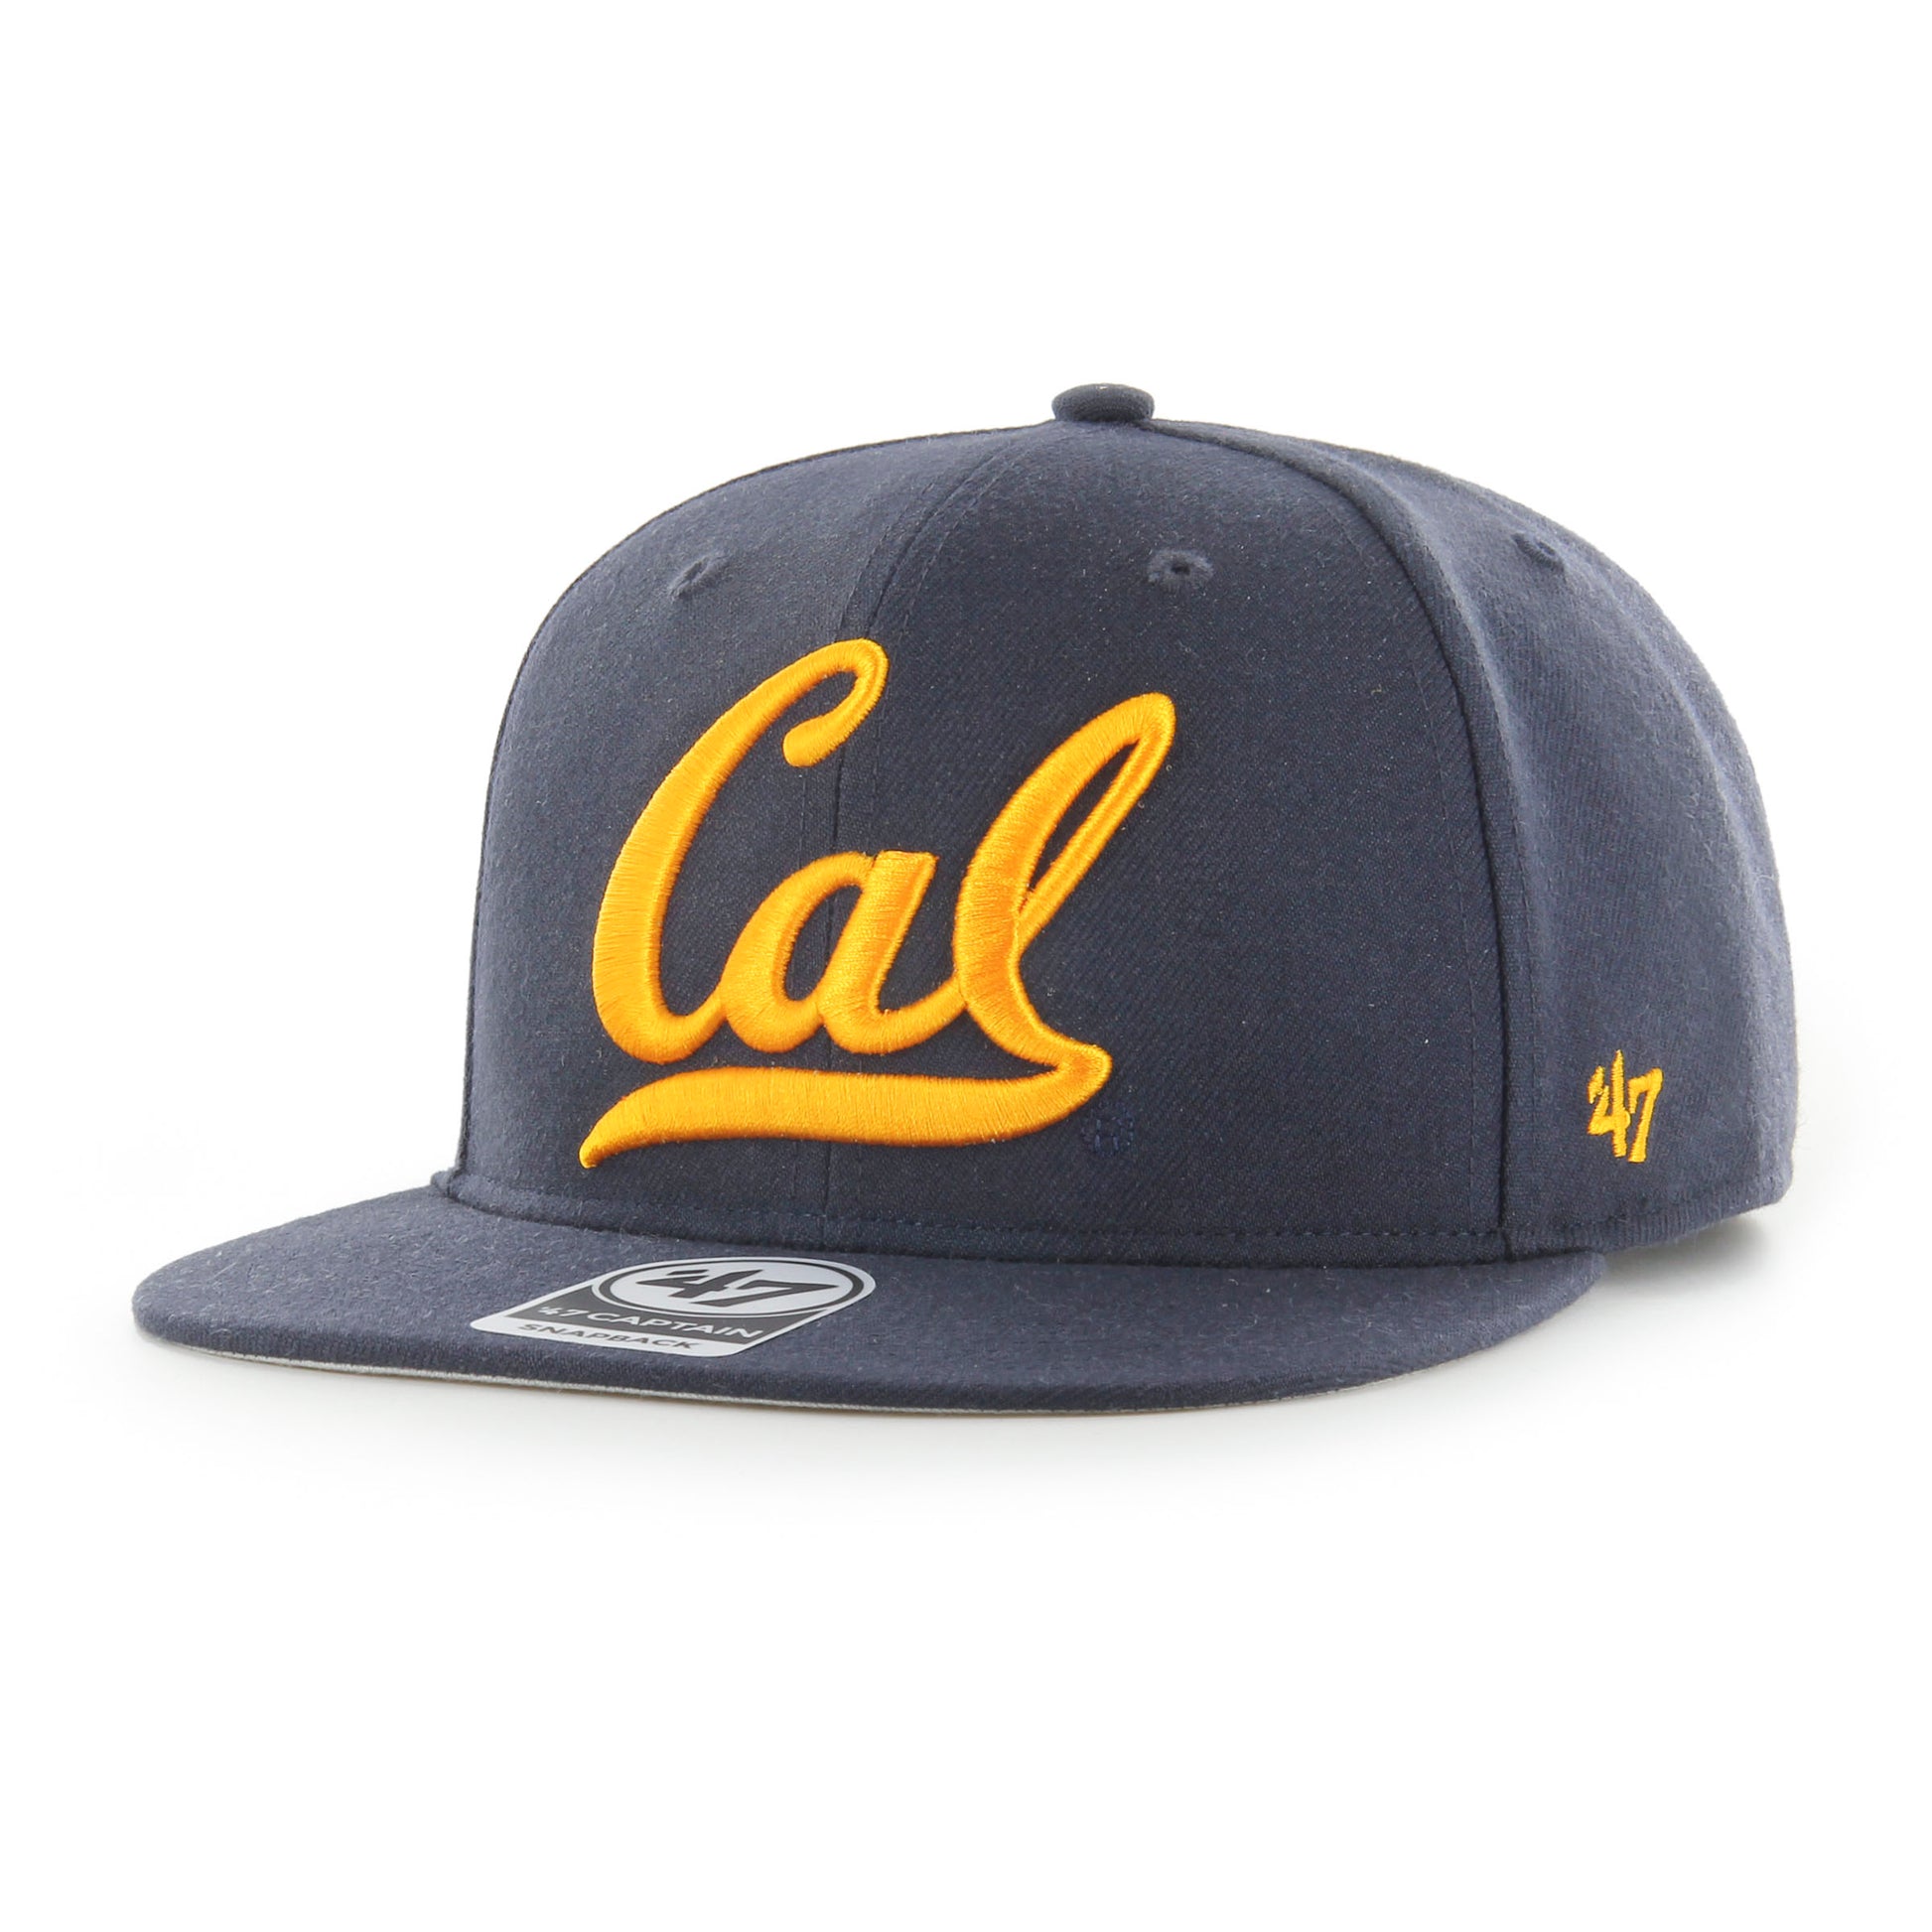 U.C. Berkeley Cal embroidered snap back hat-Navy-Shop College Wear